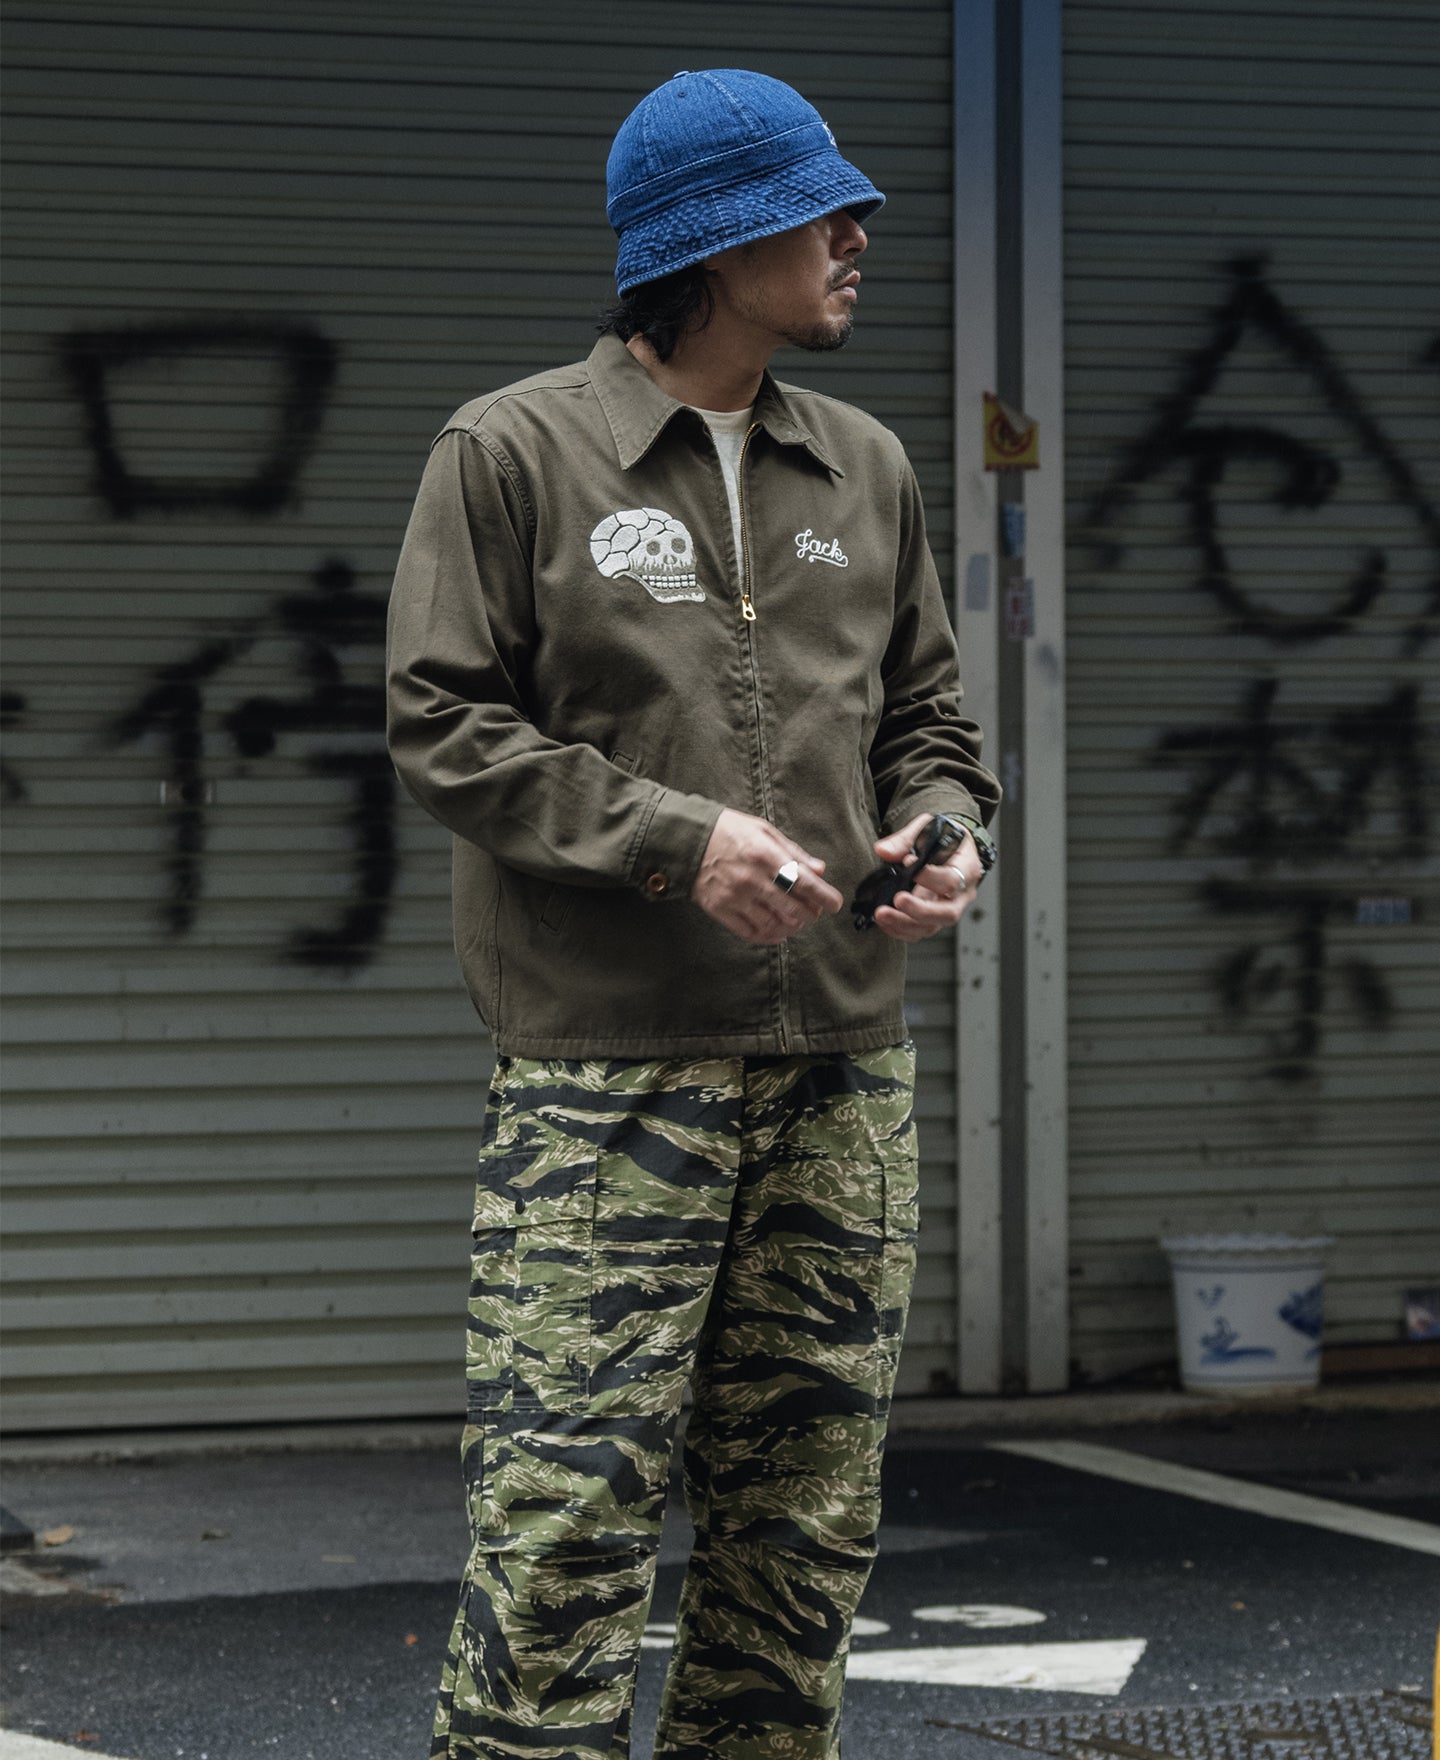 NON STOCK Tiger Stripes Camouflage Shirts Military Fatigue Uniform